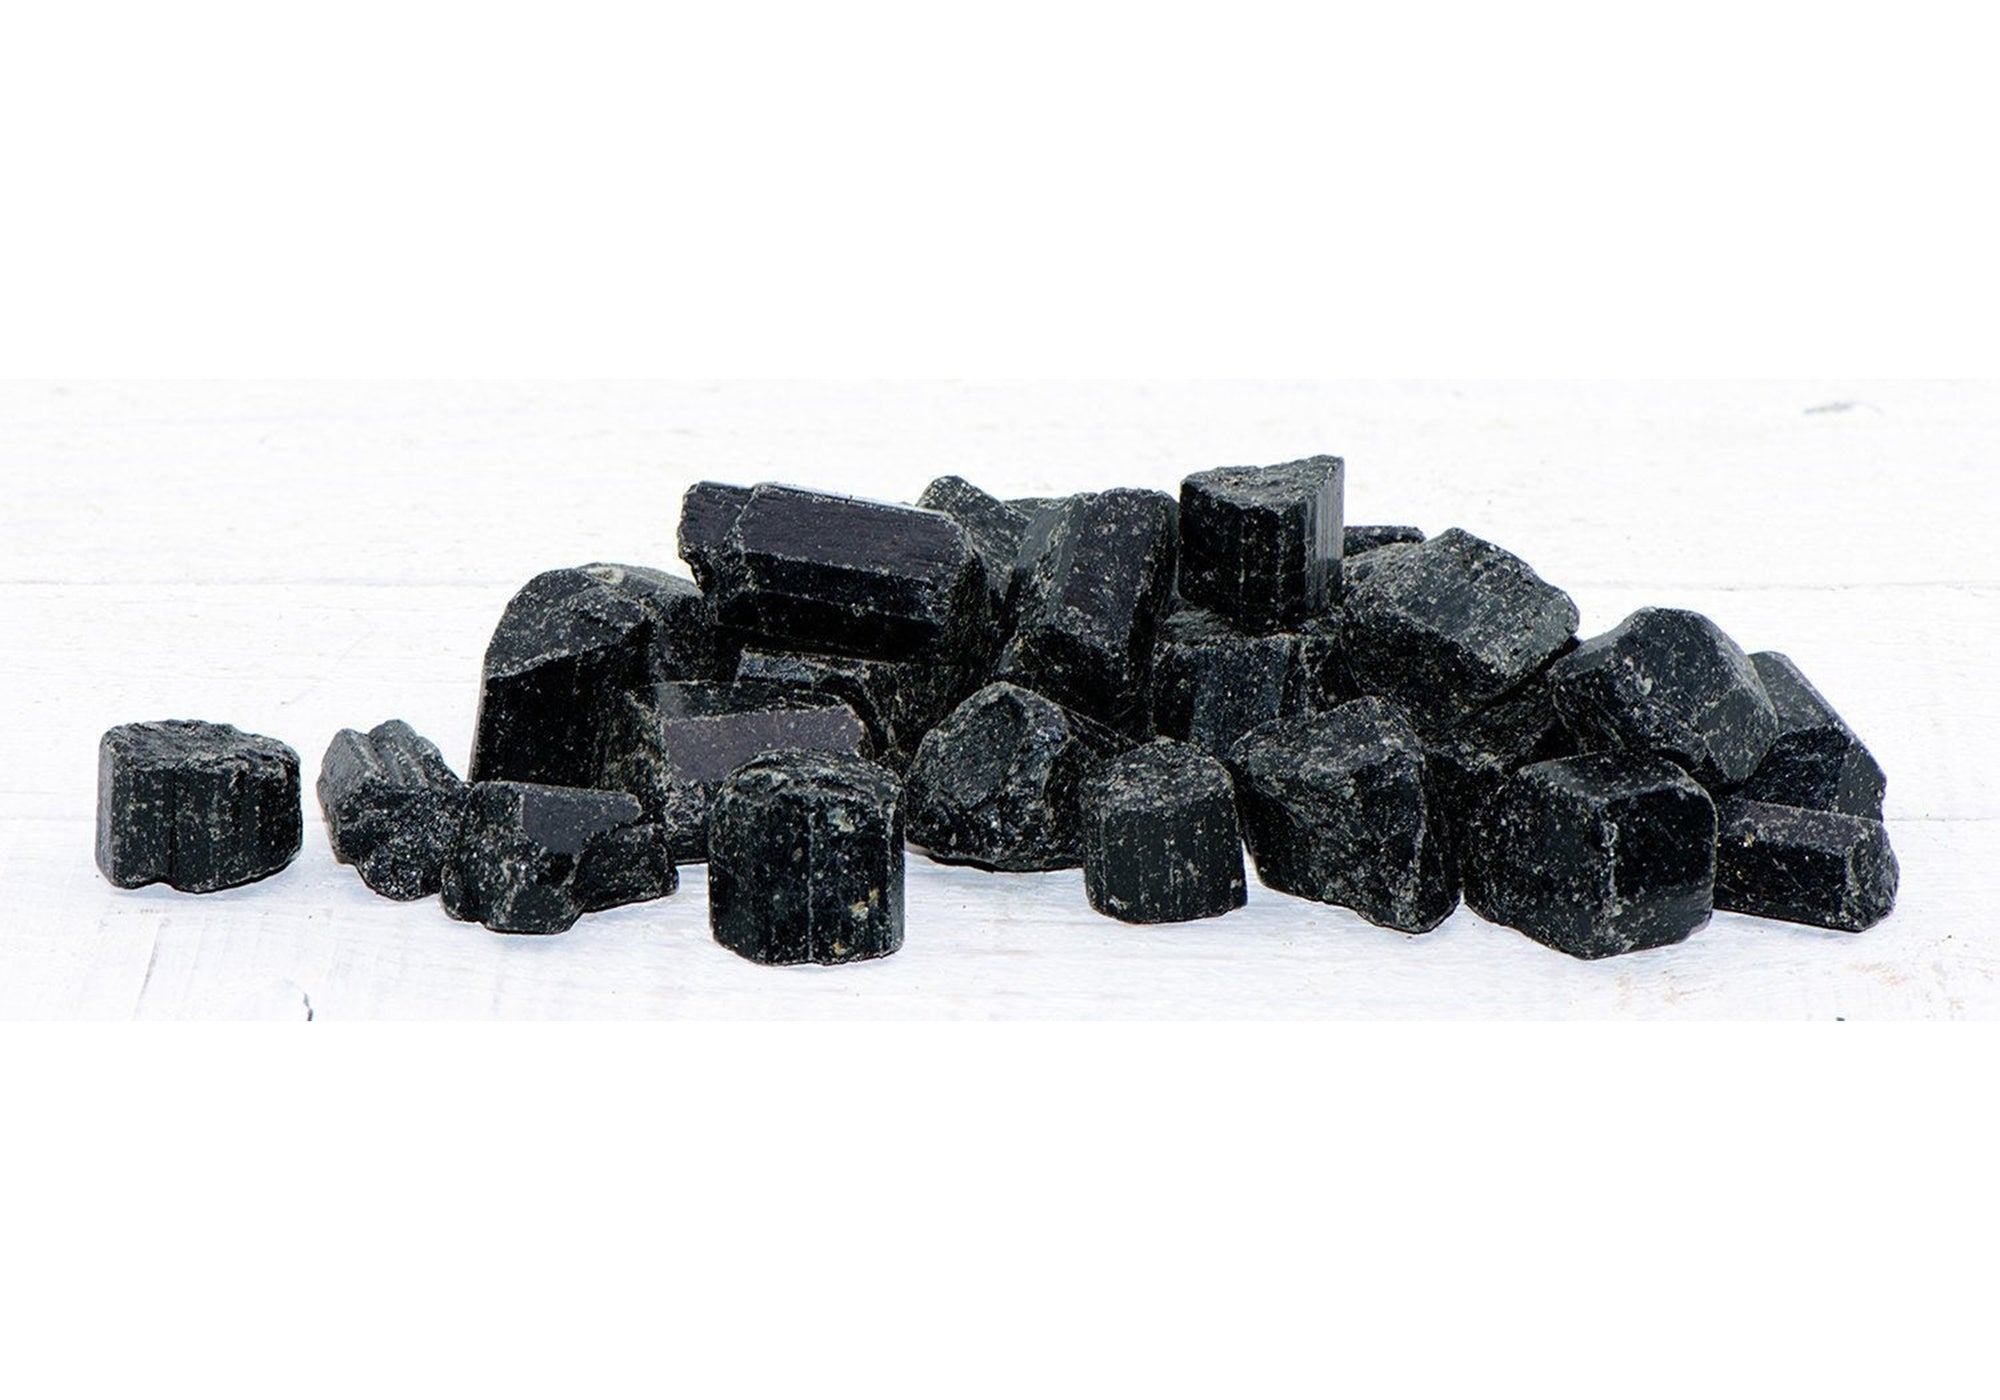  Black Tourmaline Natural Raw Rough Gemstone 2